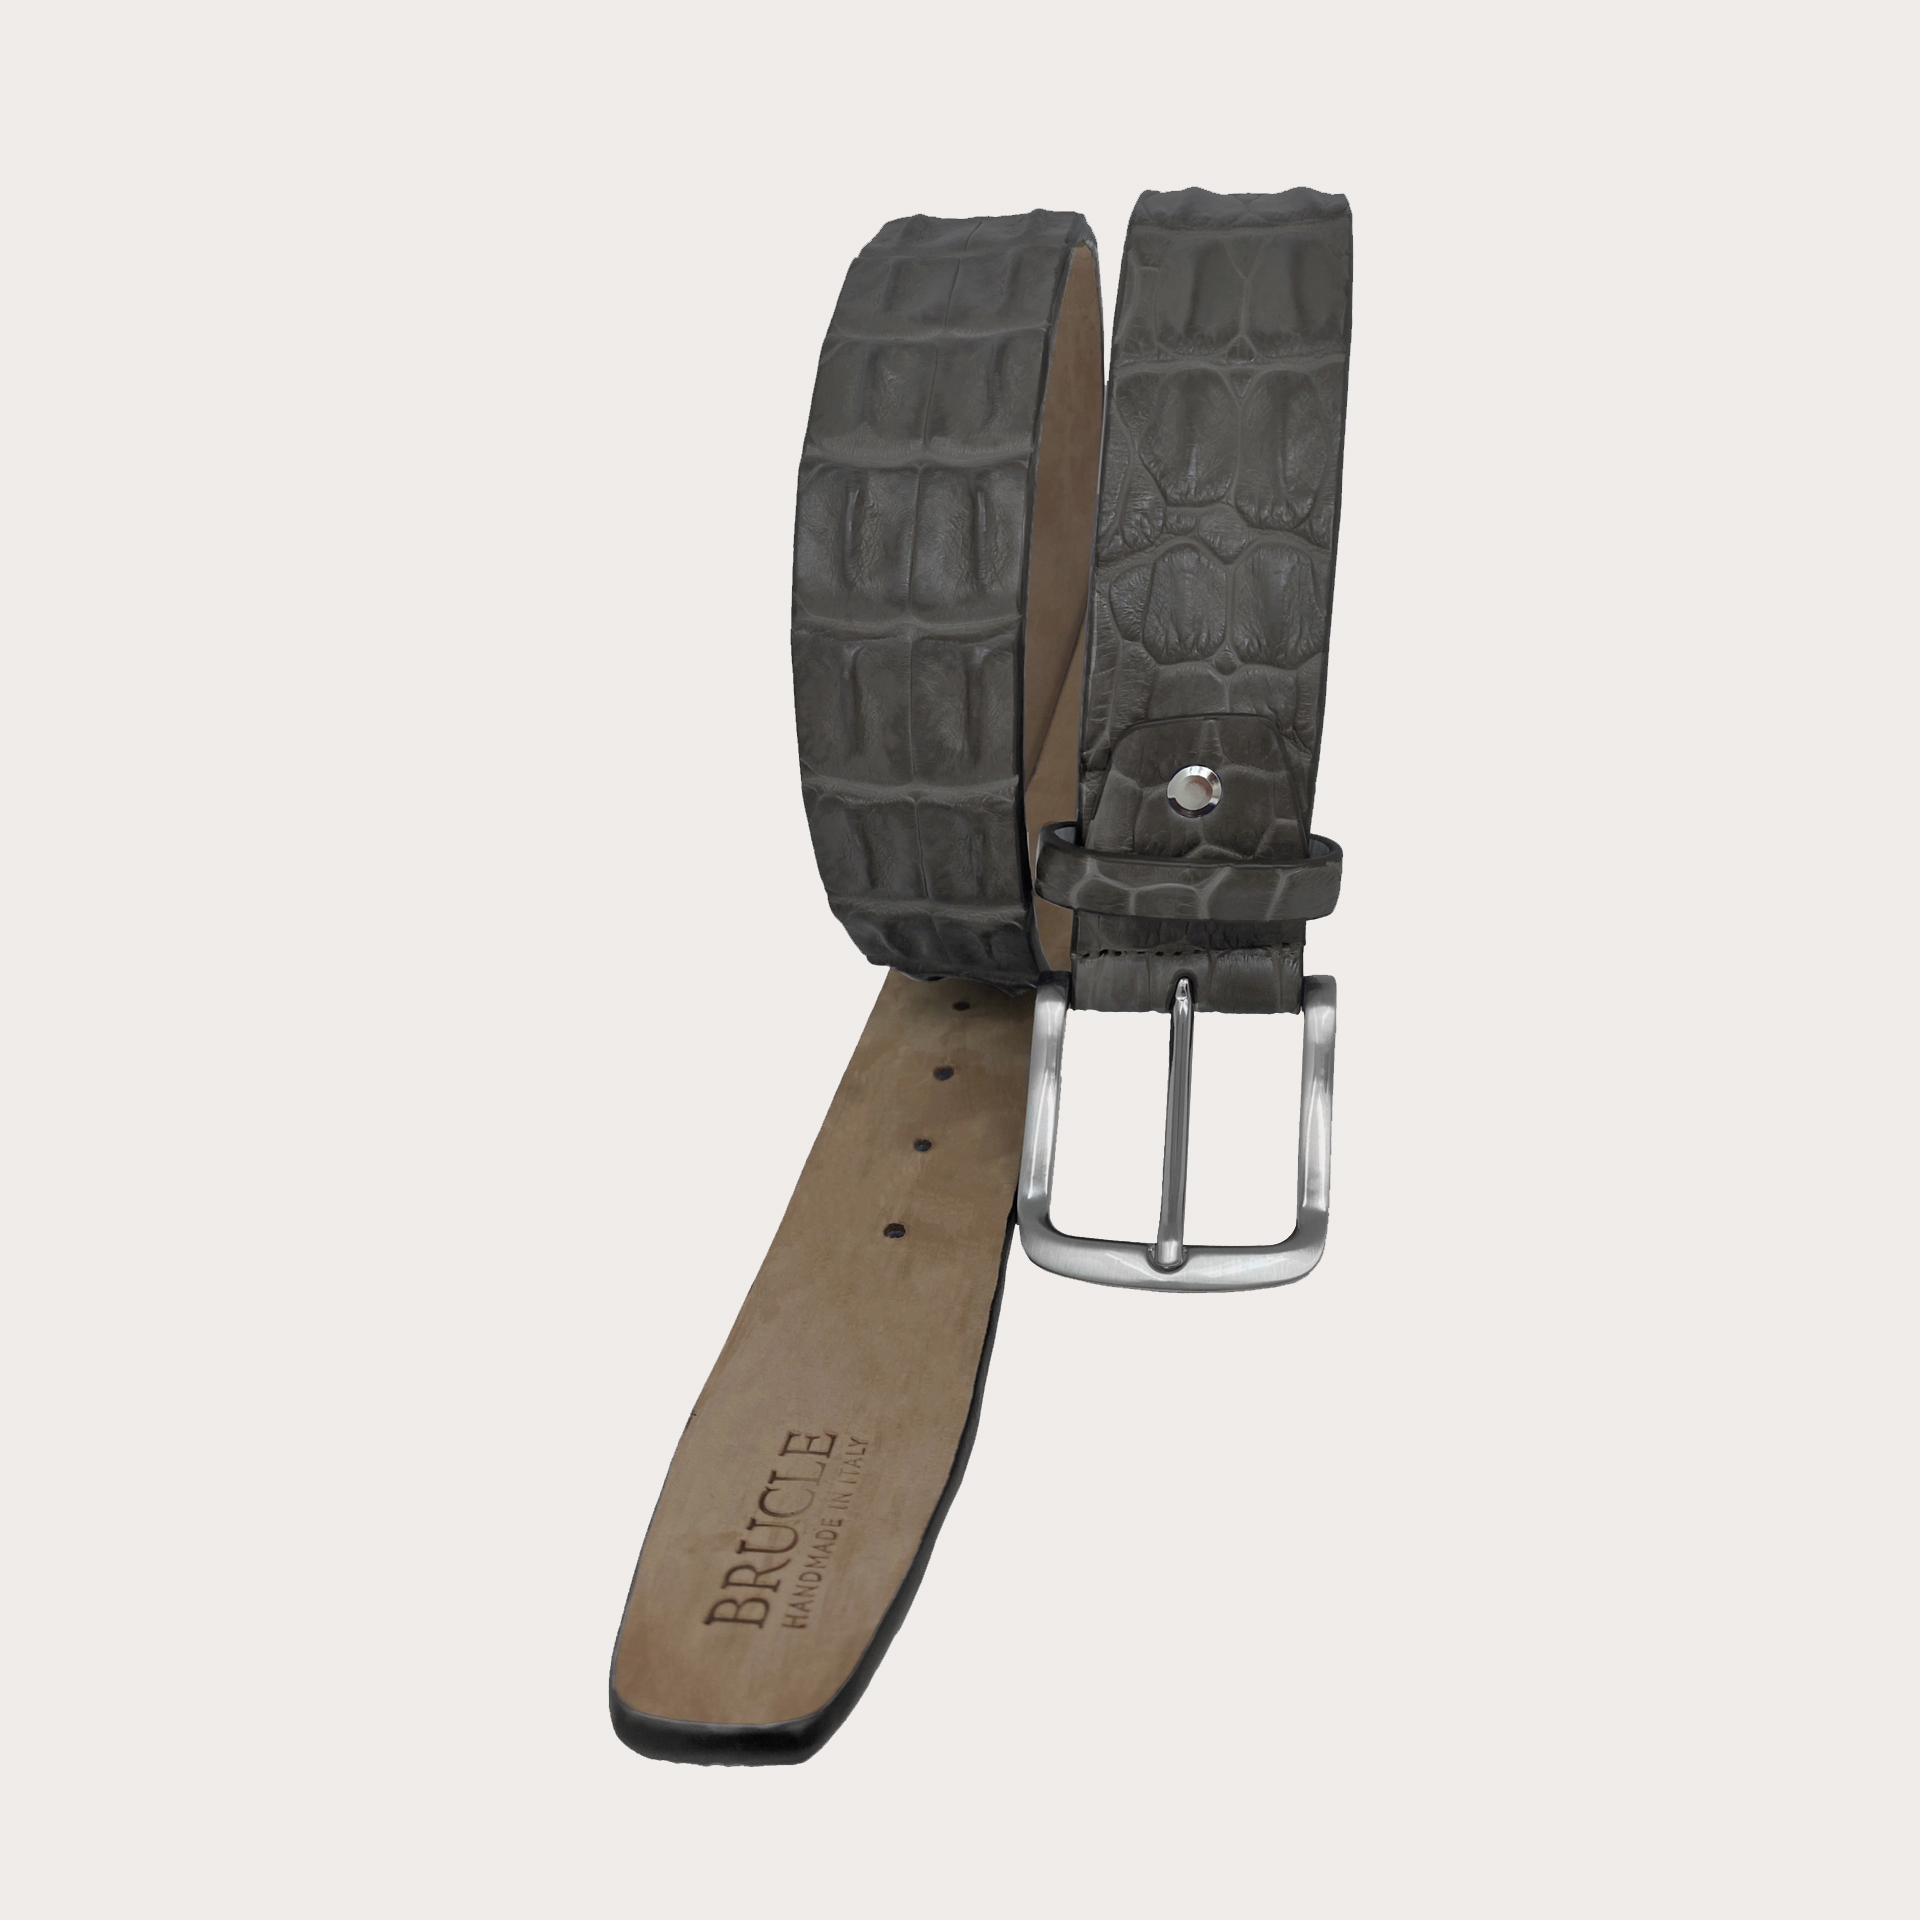 BRUCLE Sports belt in genuine crocodile leather nickel free, lead grey